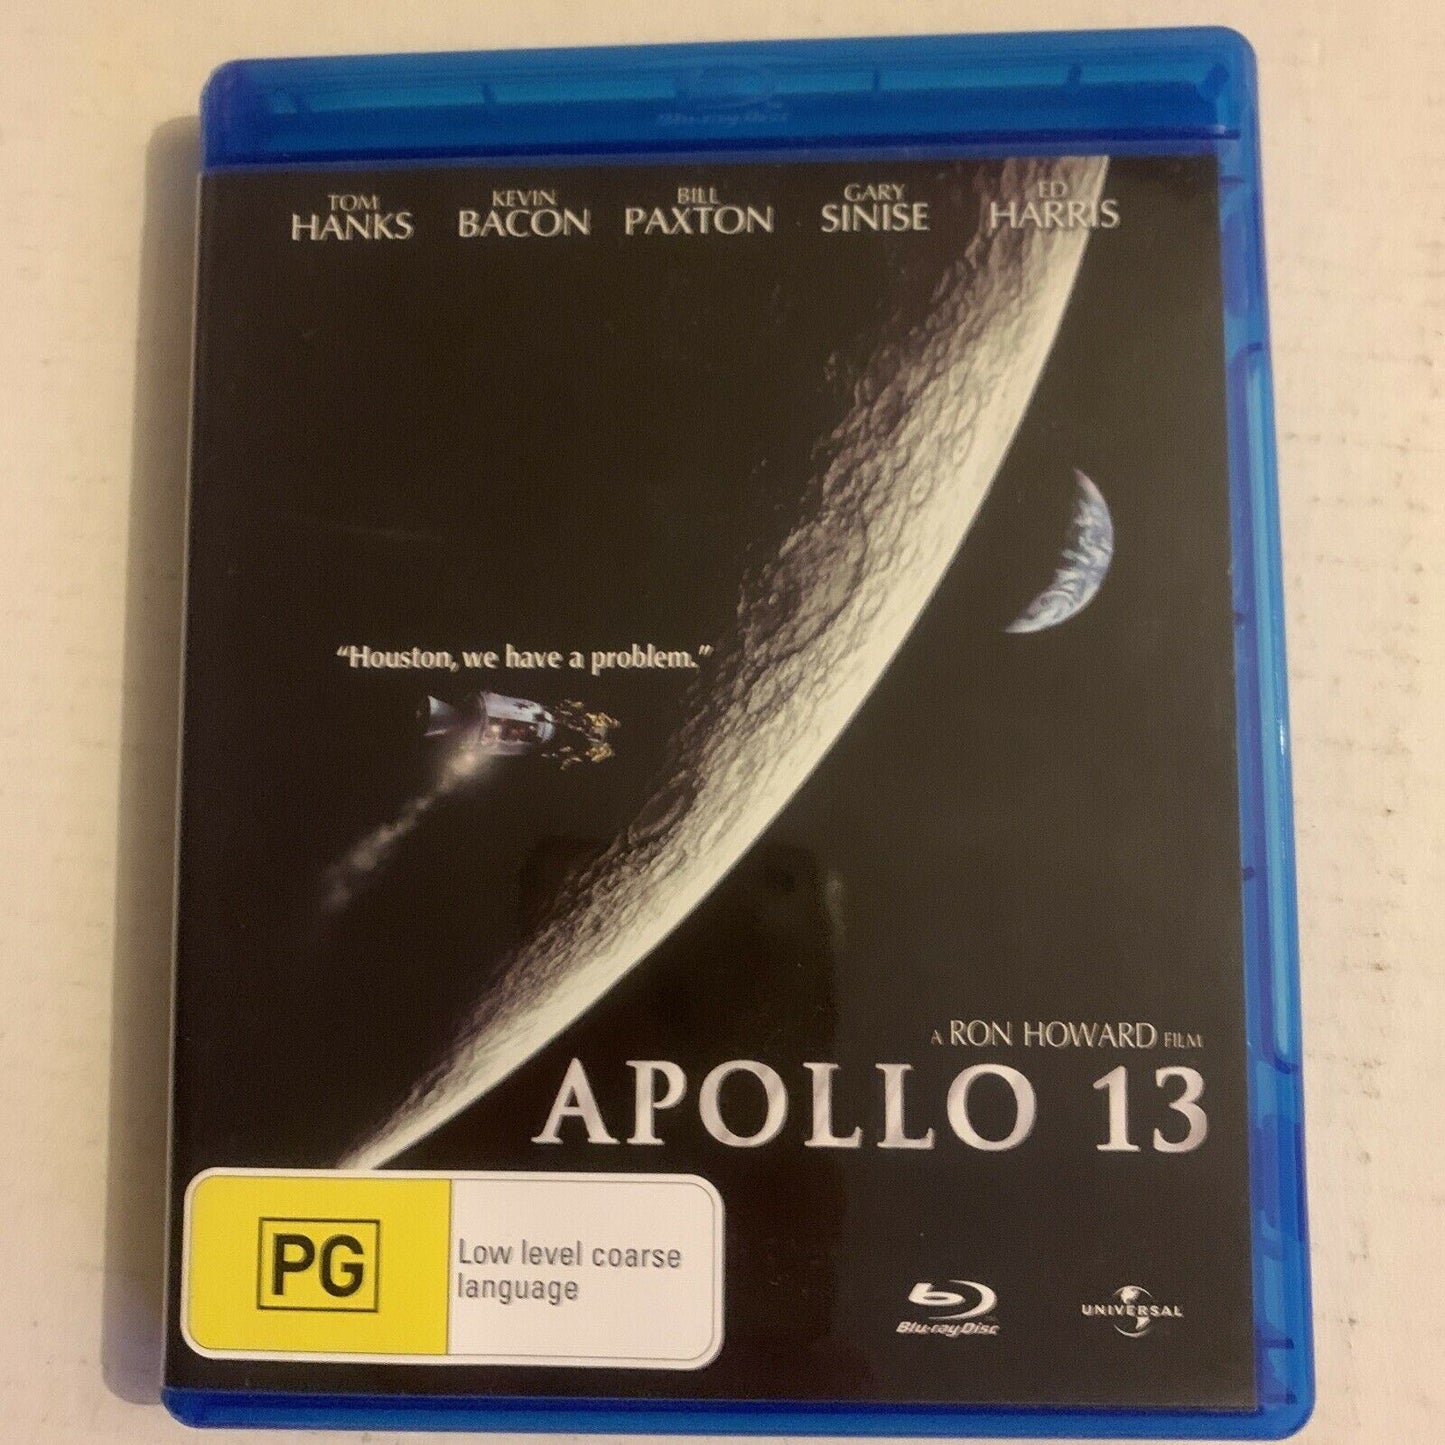 Apollo 13 (Bluray, 1995) Tom Hanks, Kevin Bacon, Bill Paxton